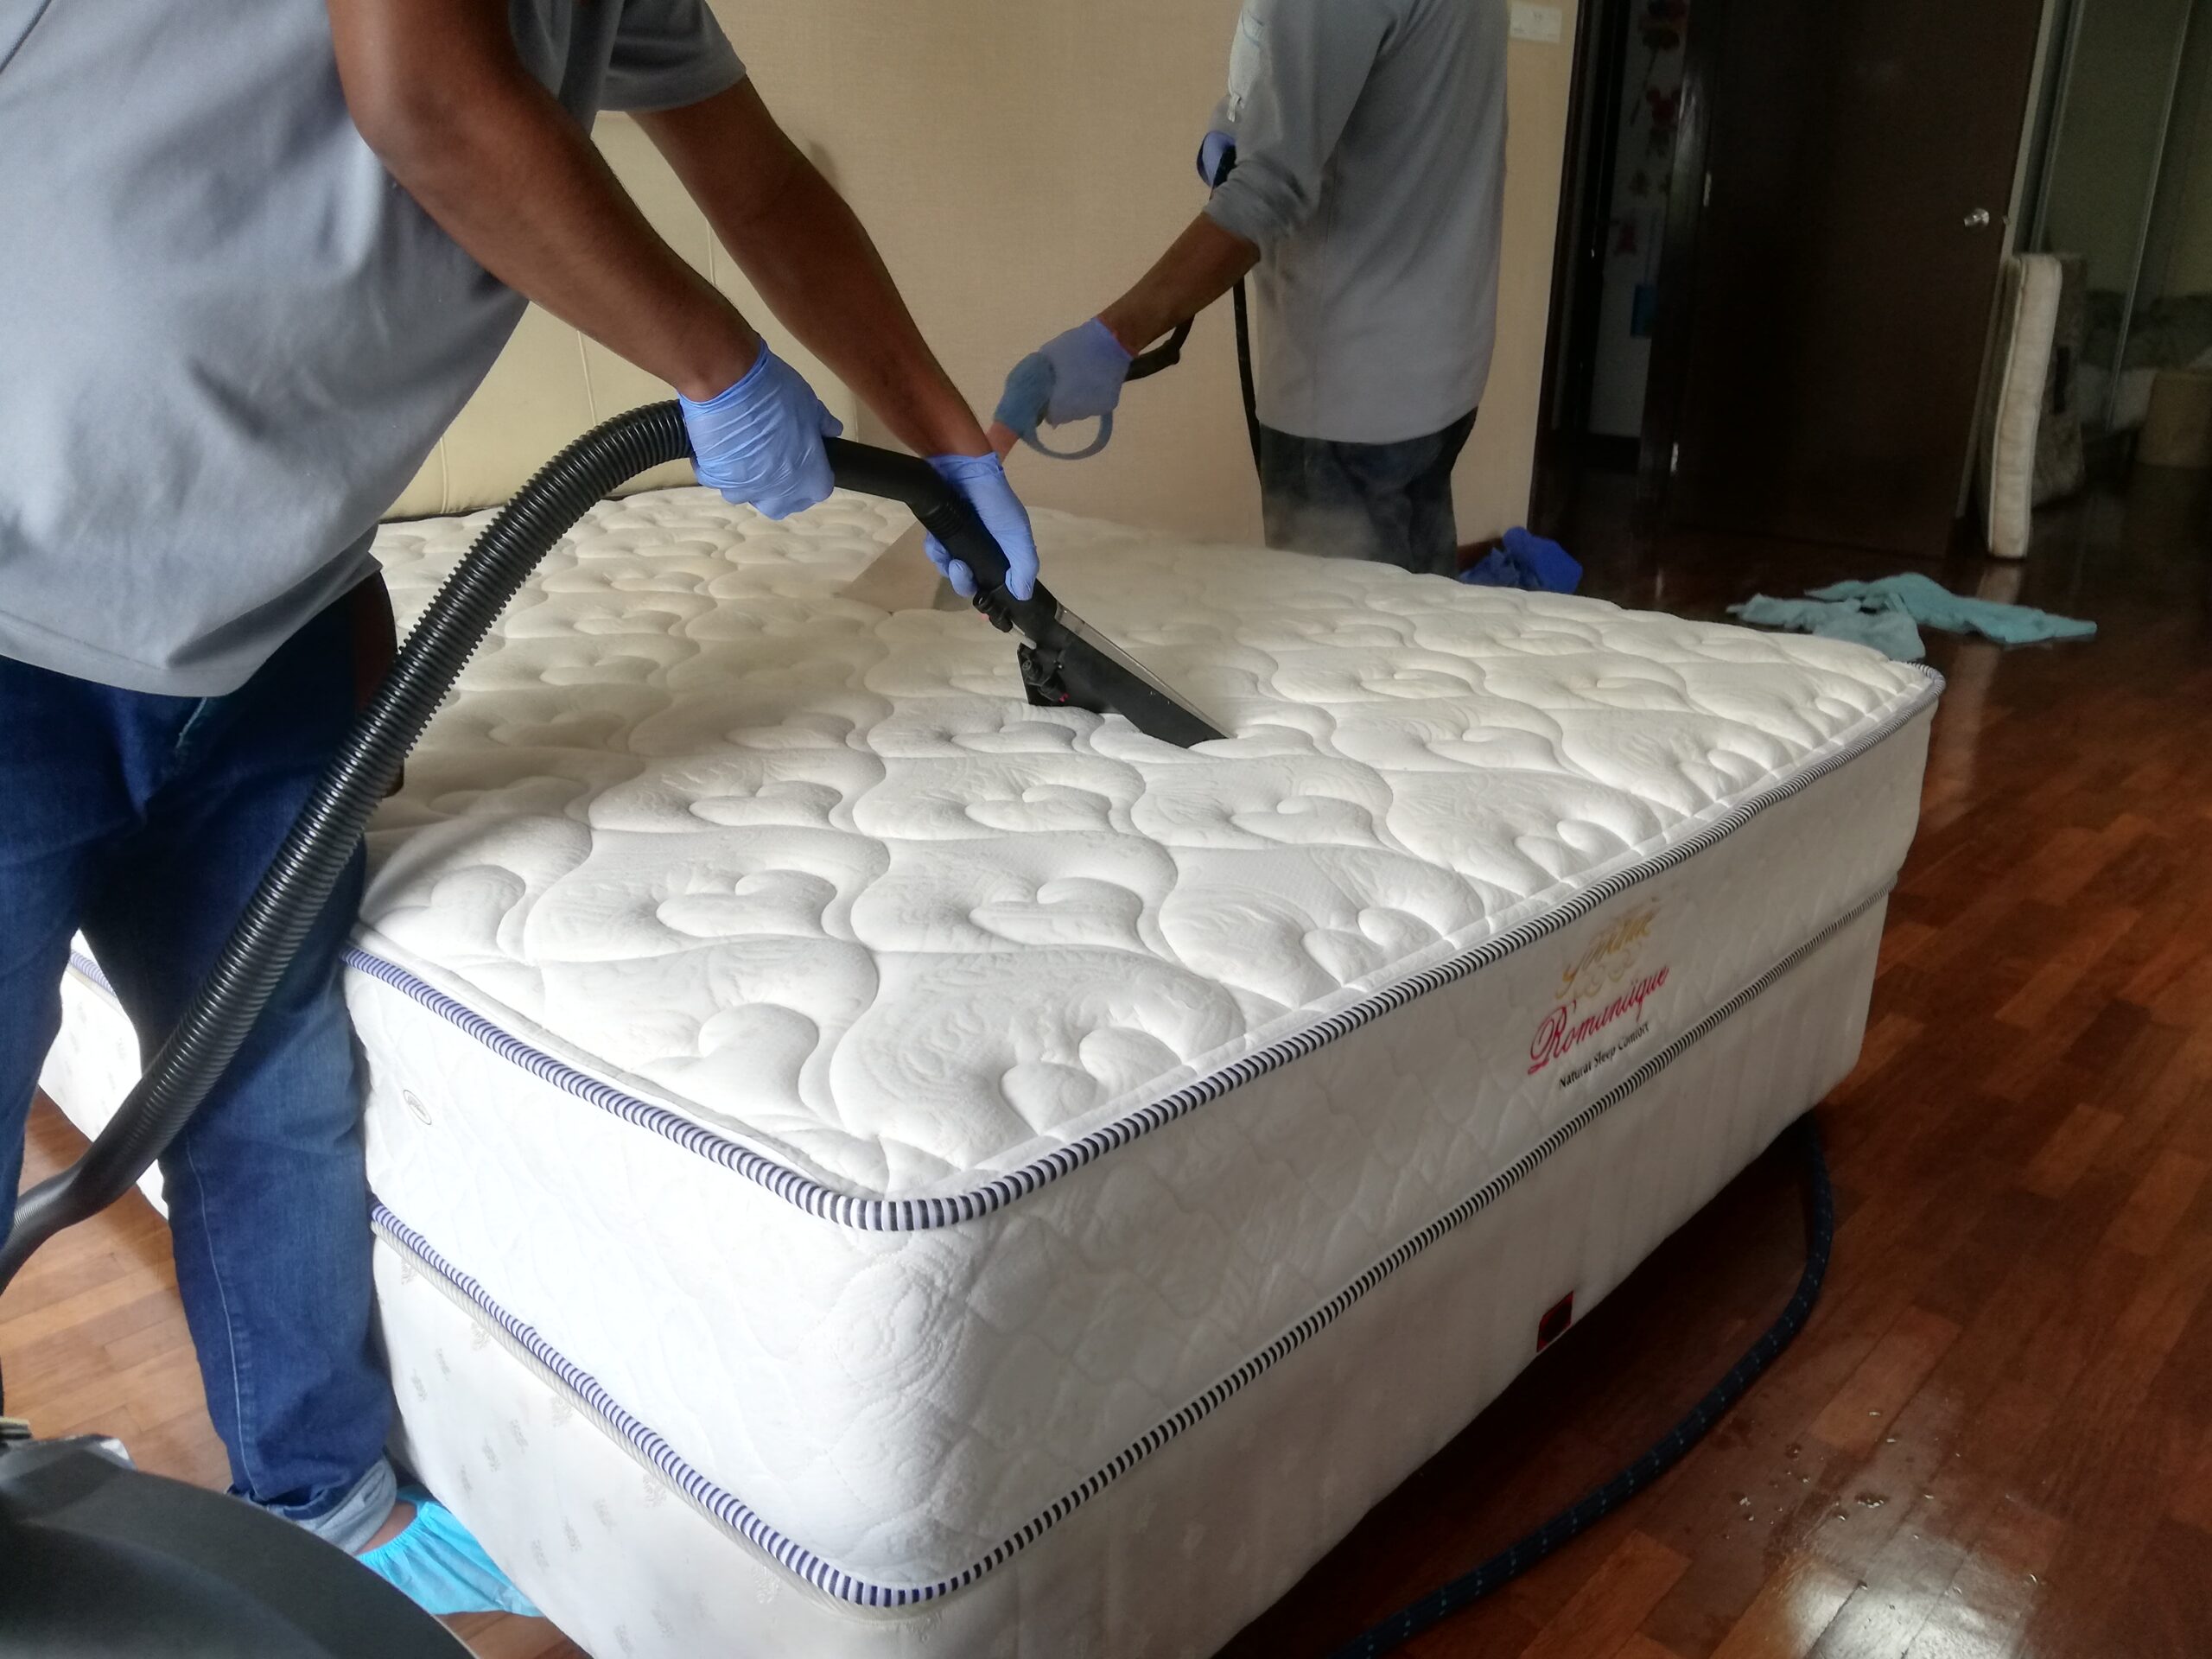 Steam cleaning mattress